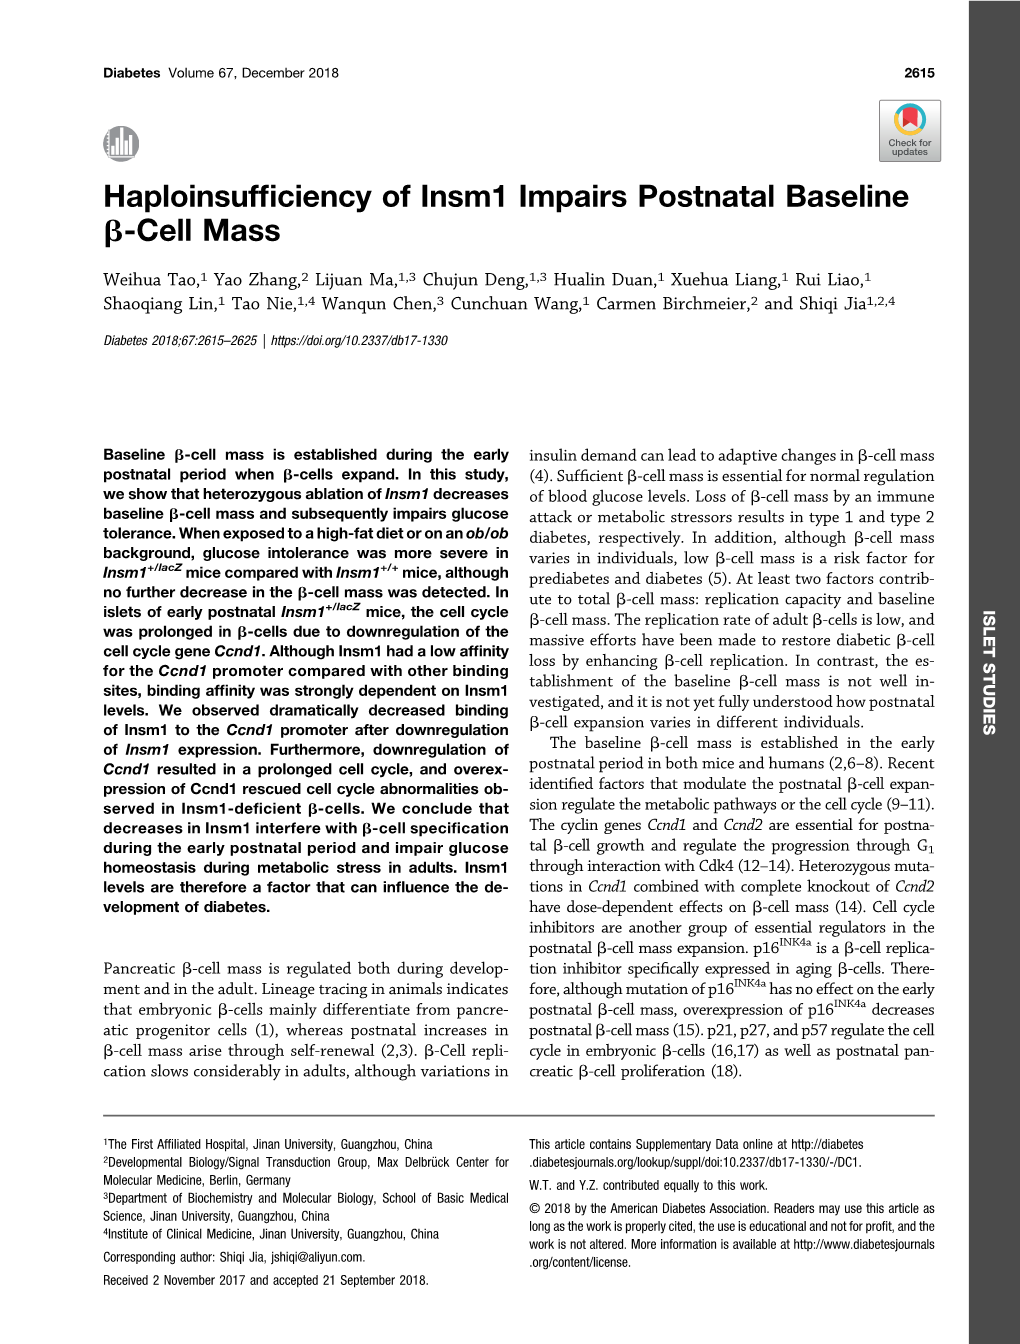 Haploinsufficiency of Insm1 Impairs Postnatal Baseline Β-Cell Mass